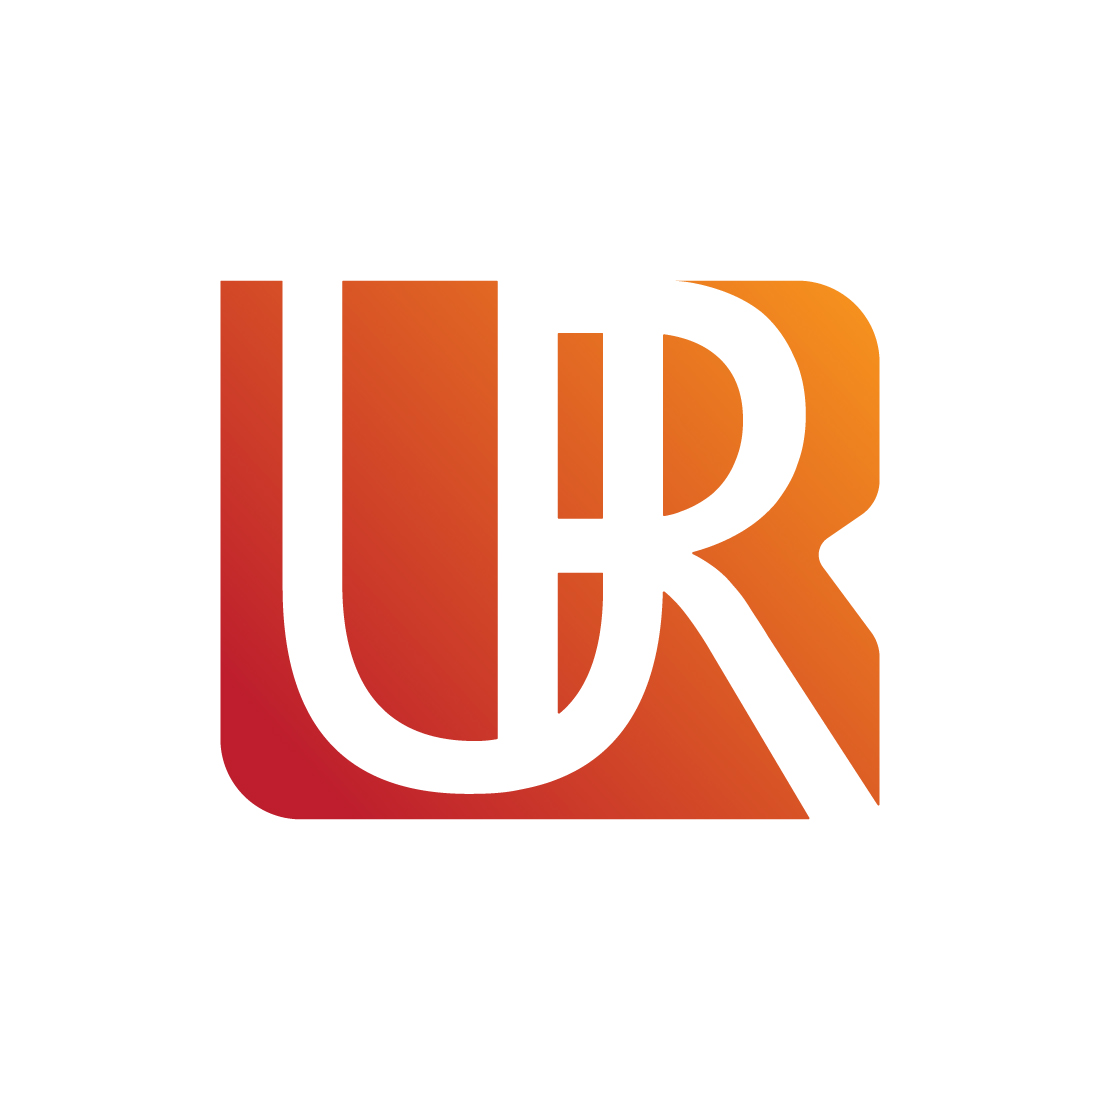 UR letters logo design vector images RU logo monogram template design UR logo orange color best company identity preview image.